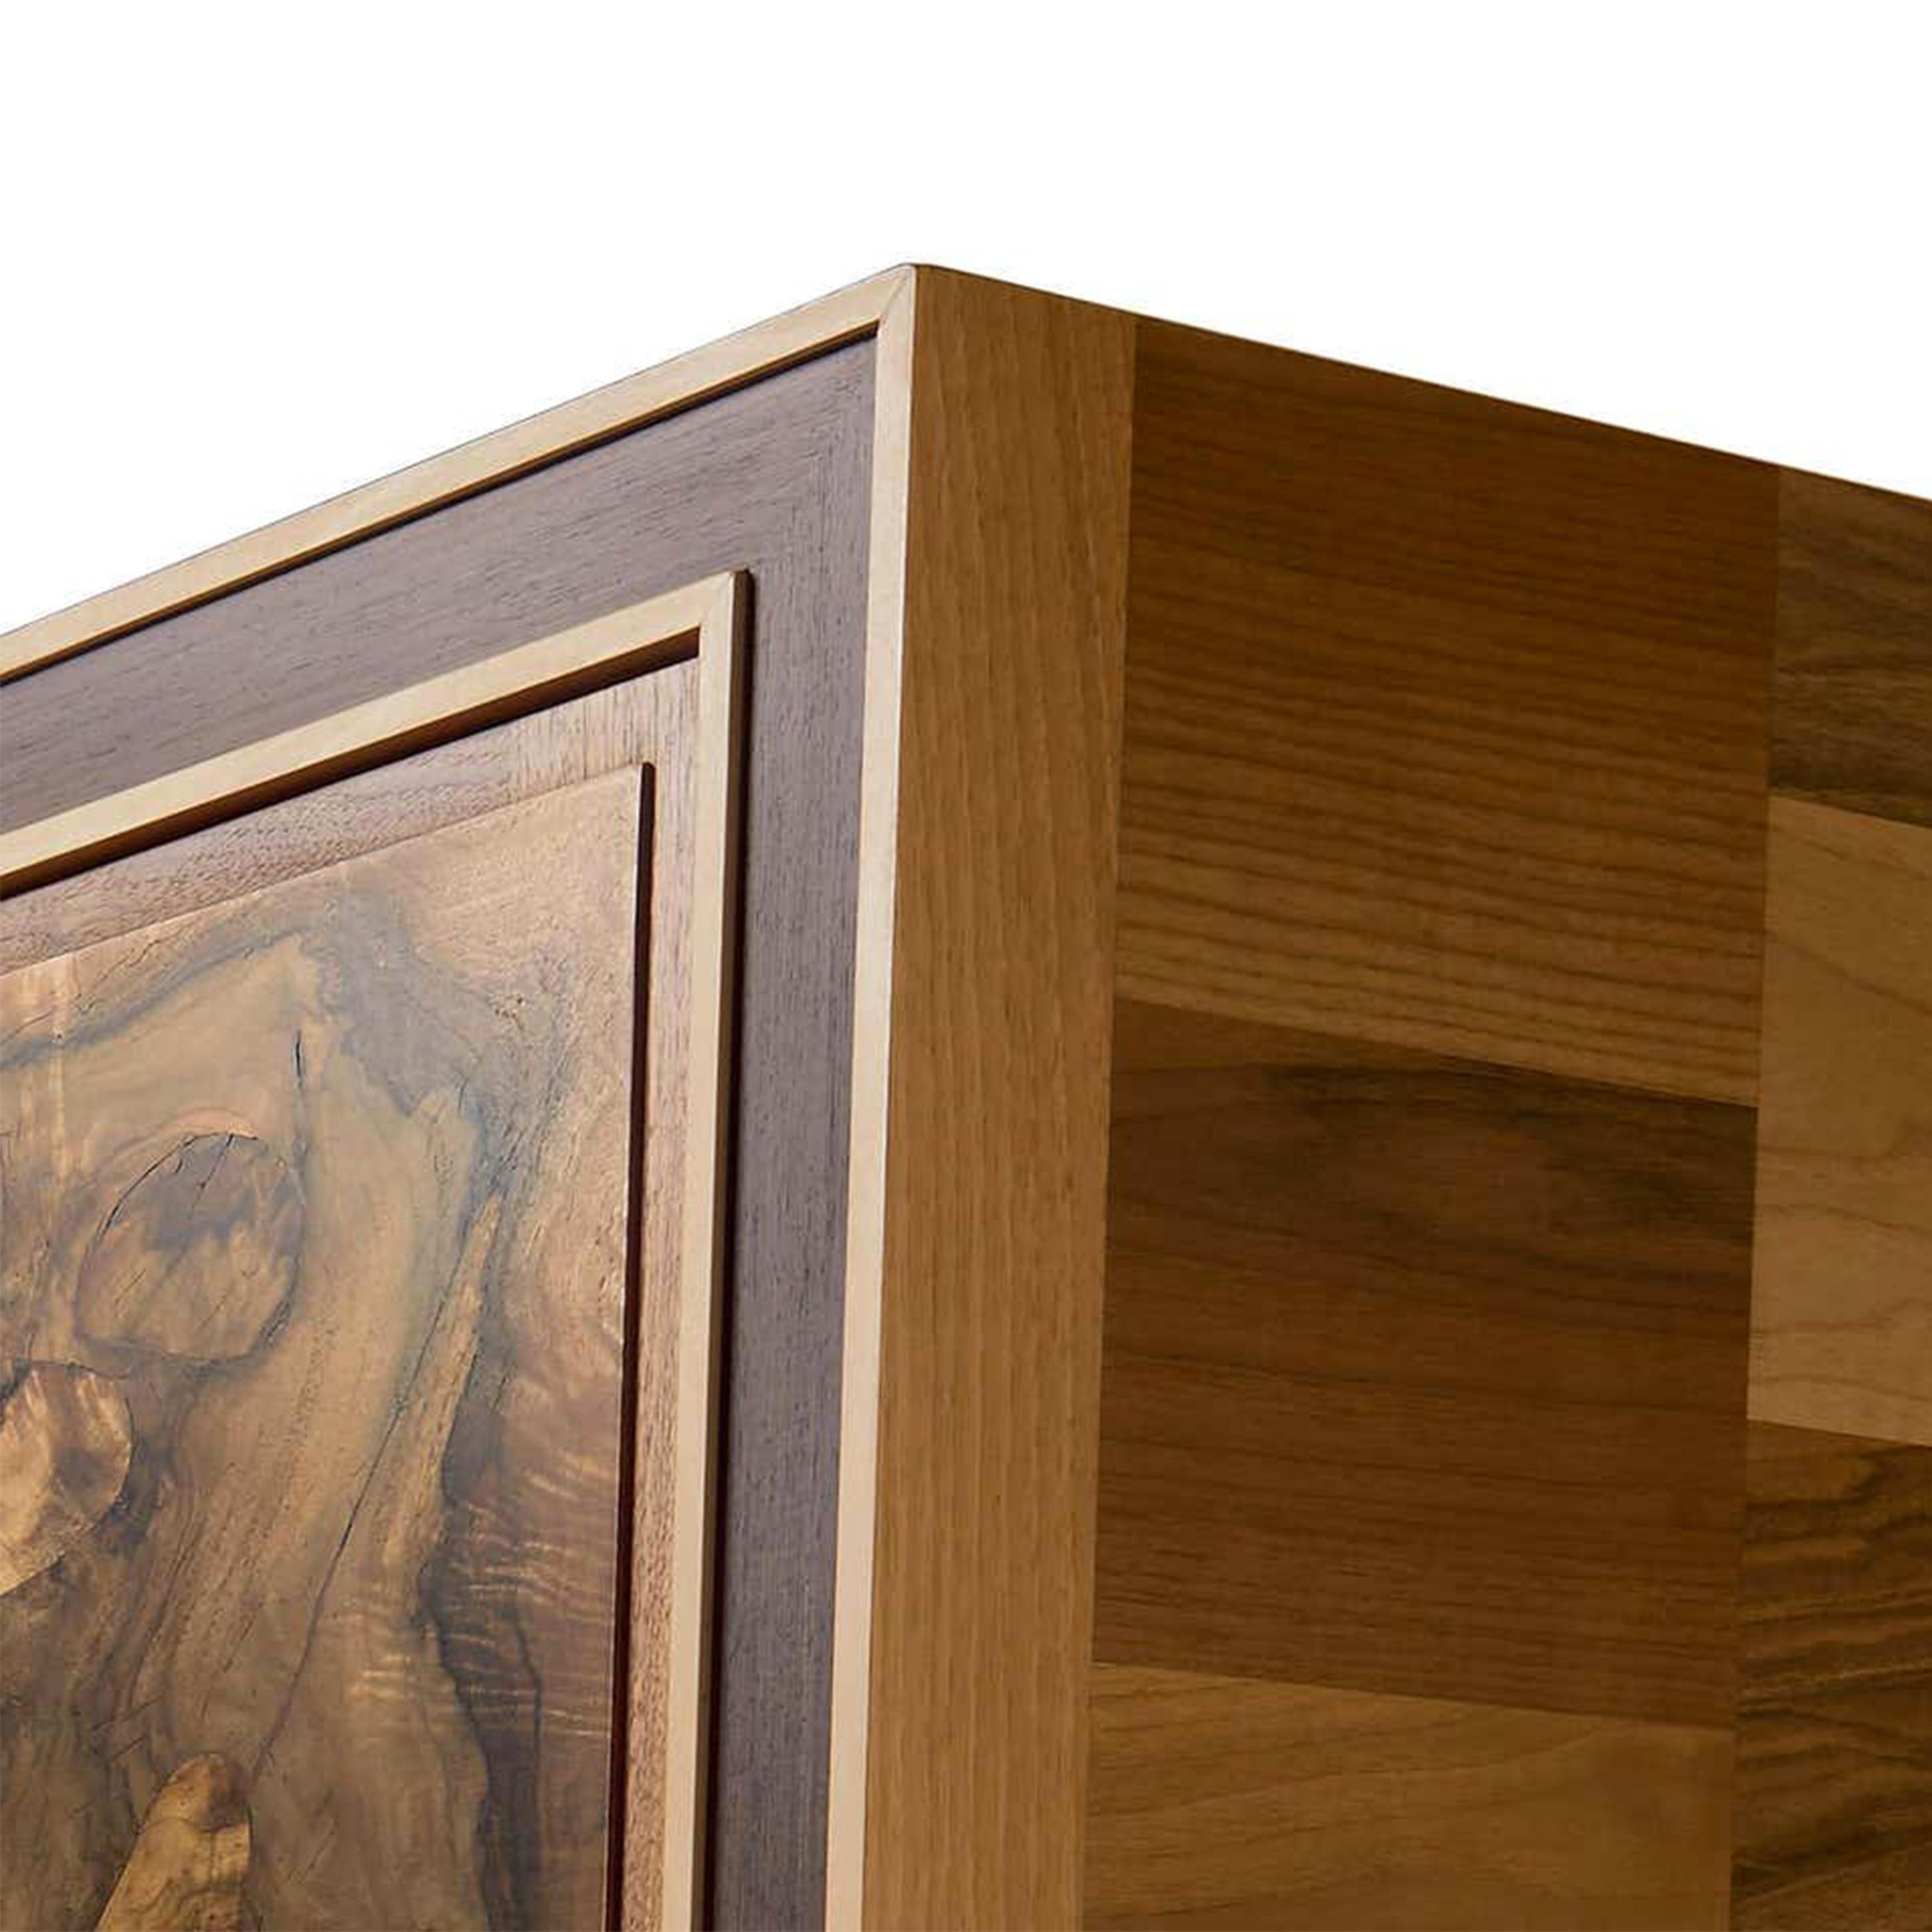 Quadra Solid Wood Sideboard, Walnut, Briar in Natural Finish, Contemporary In New Condition For Sale In Cadeglioppi de Oppeano, VR